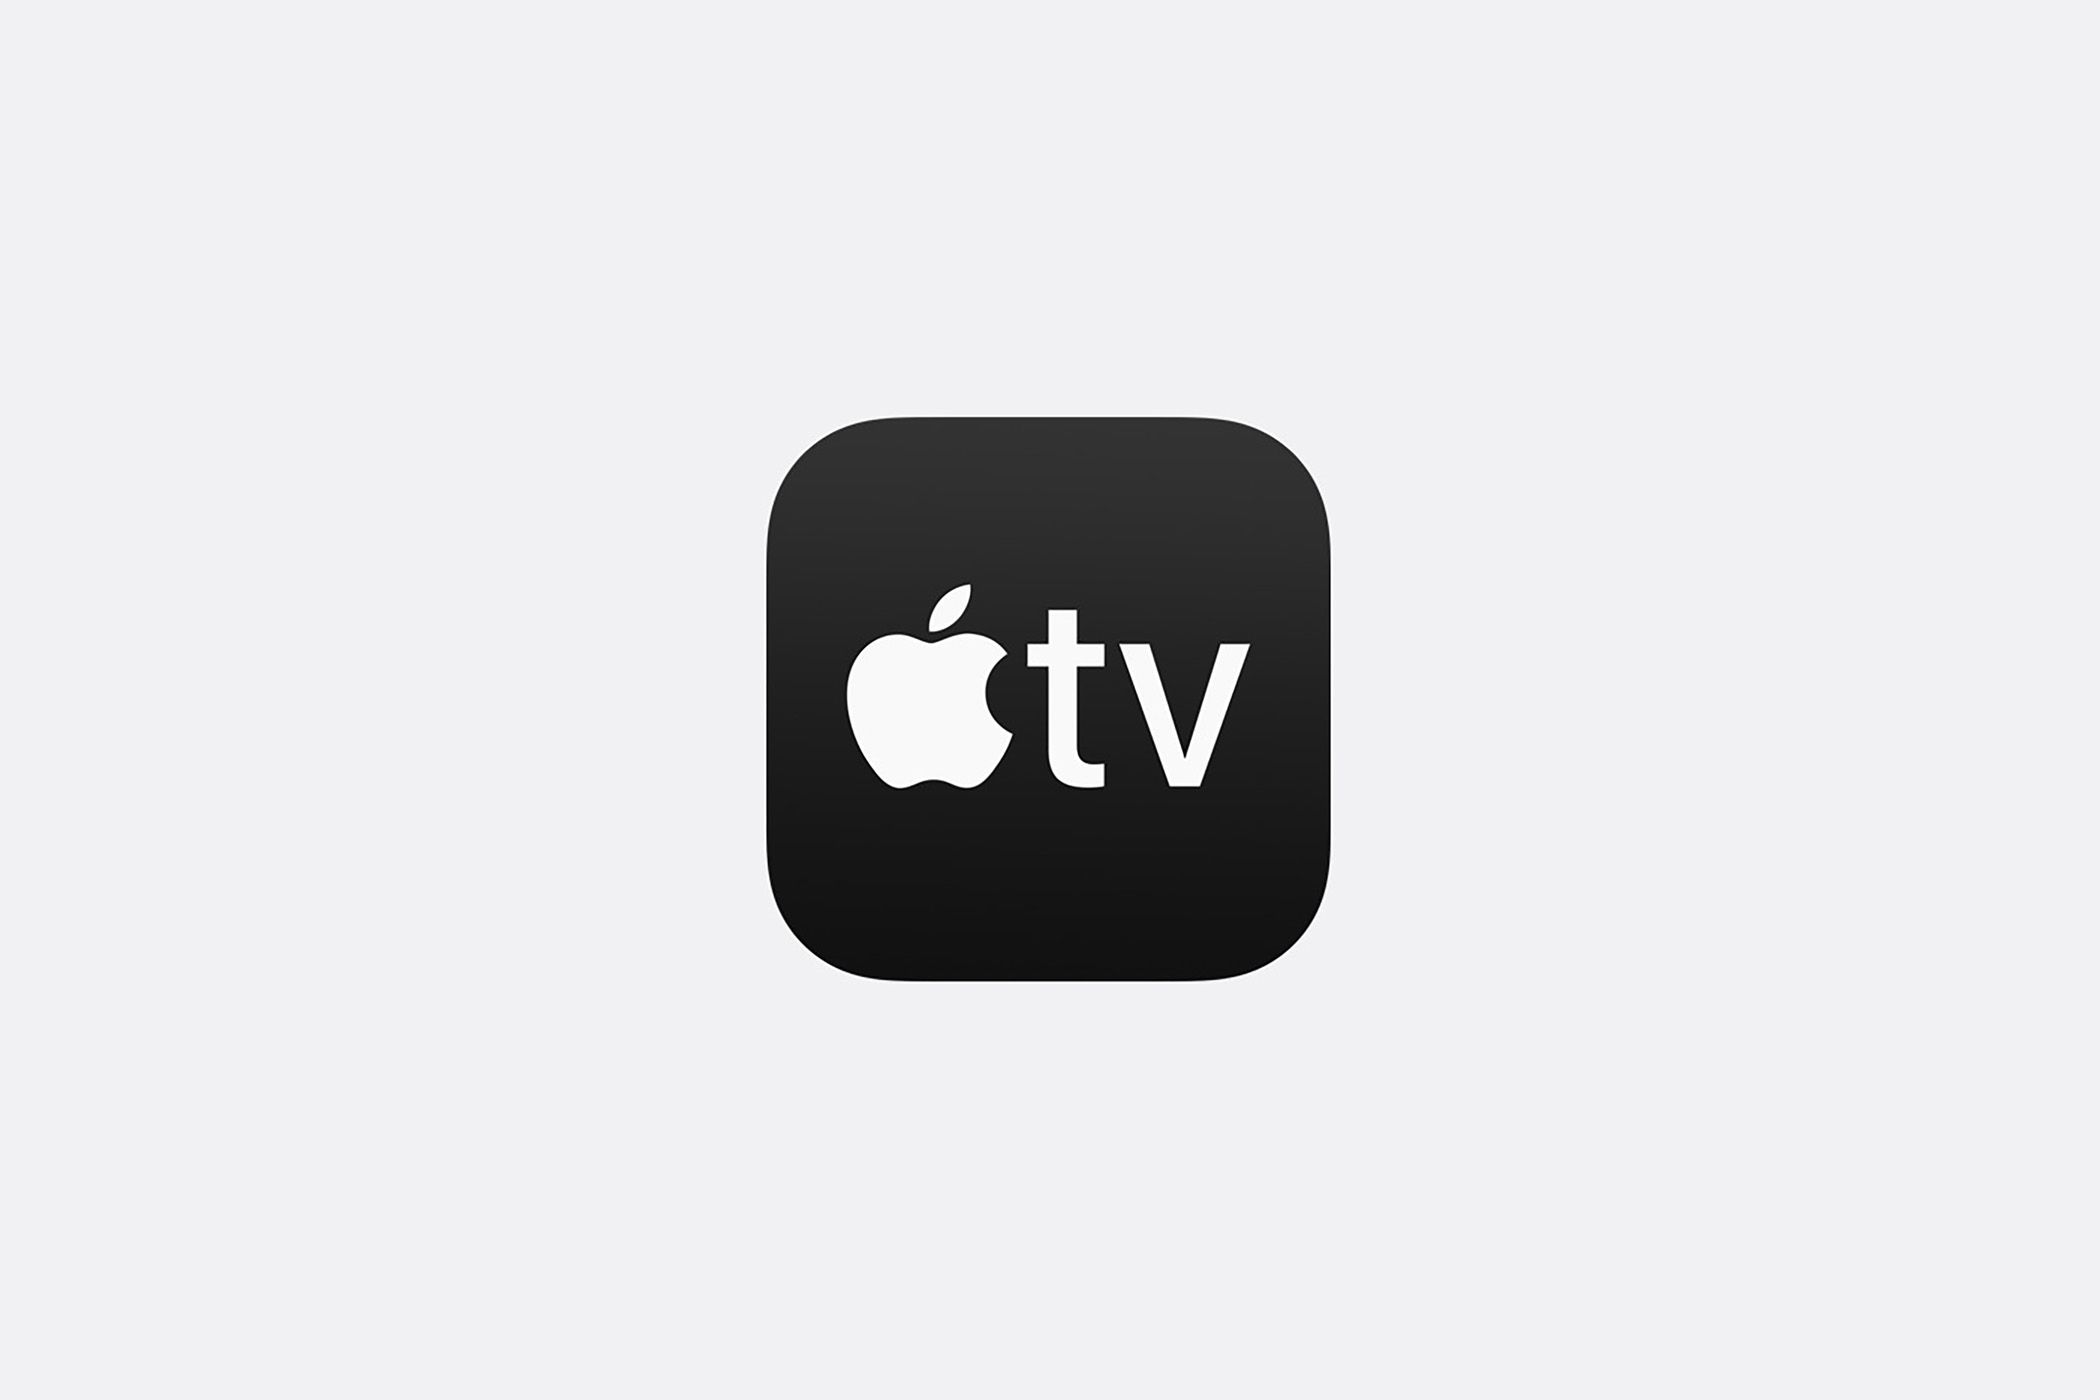 Apple TV logo on gray background.